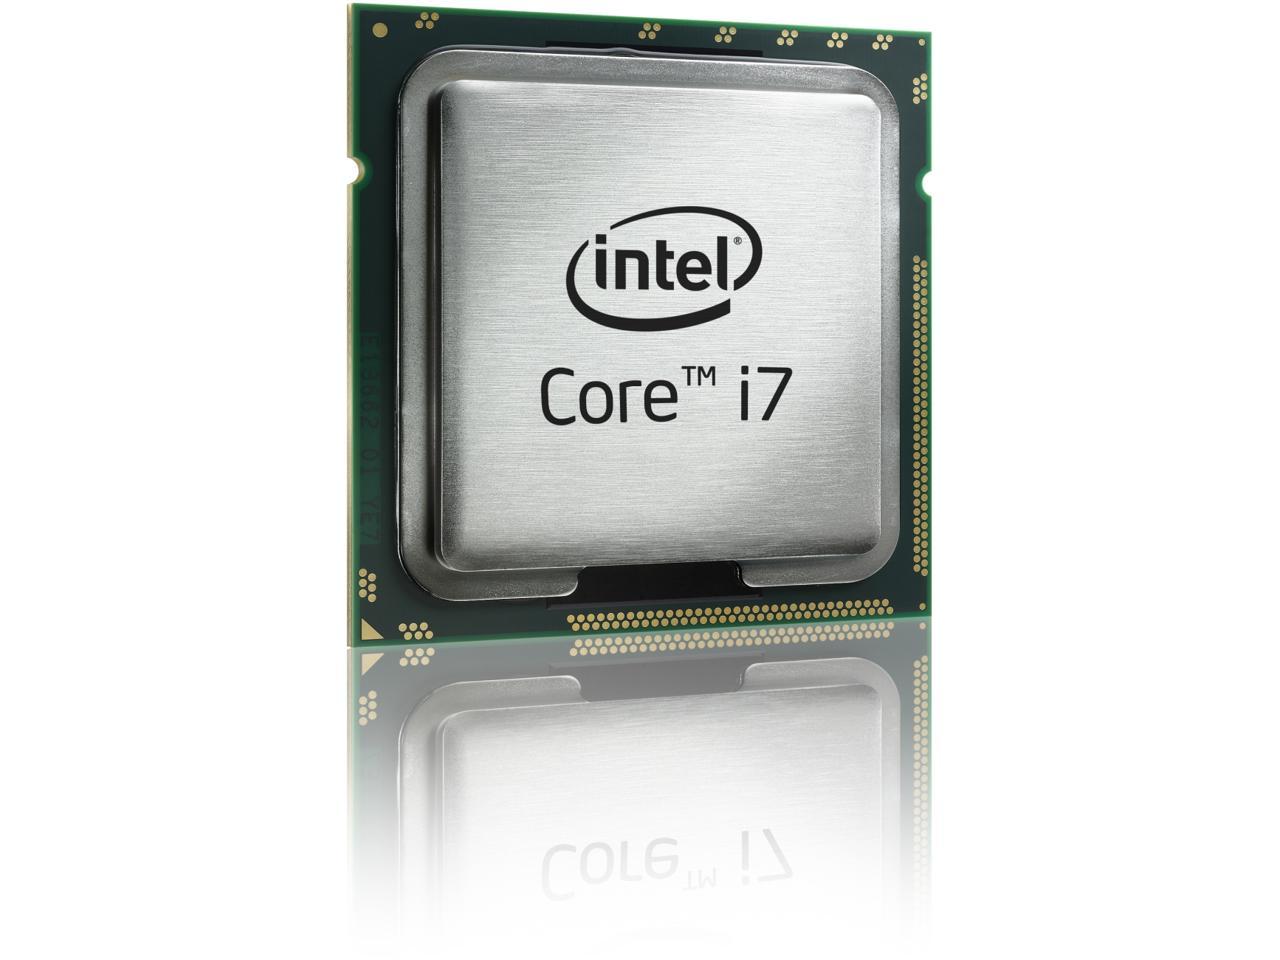 SEAL限定商品 Intel Core i7 Extreme i7-980X 3.33GHz 12M LGA1366 Gulftown  BX80613I7980X